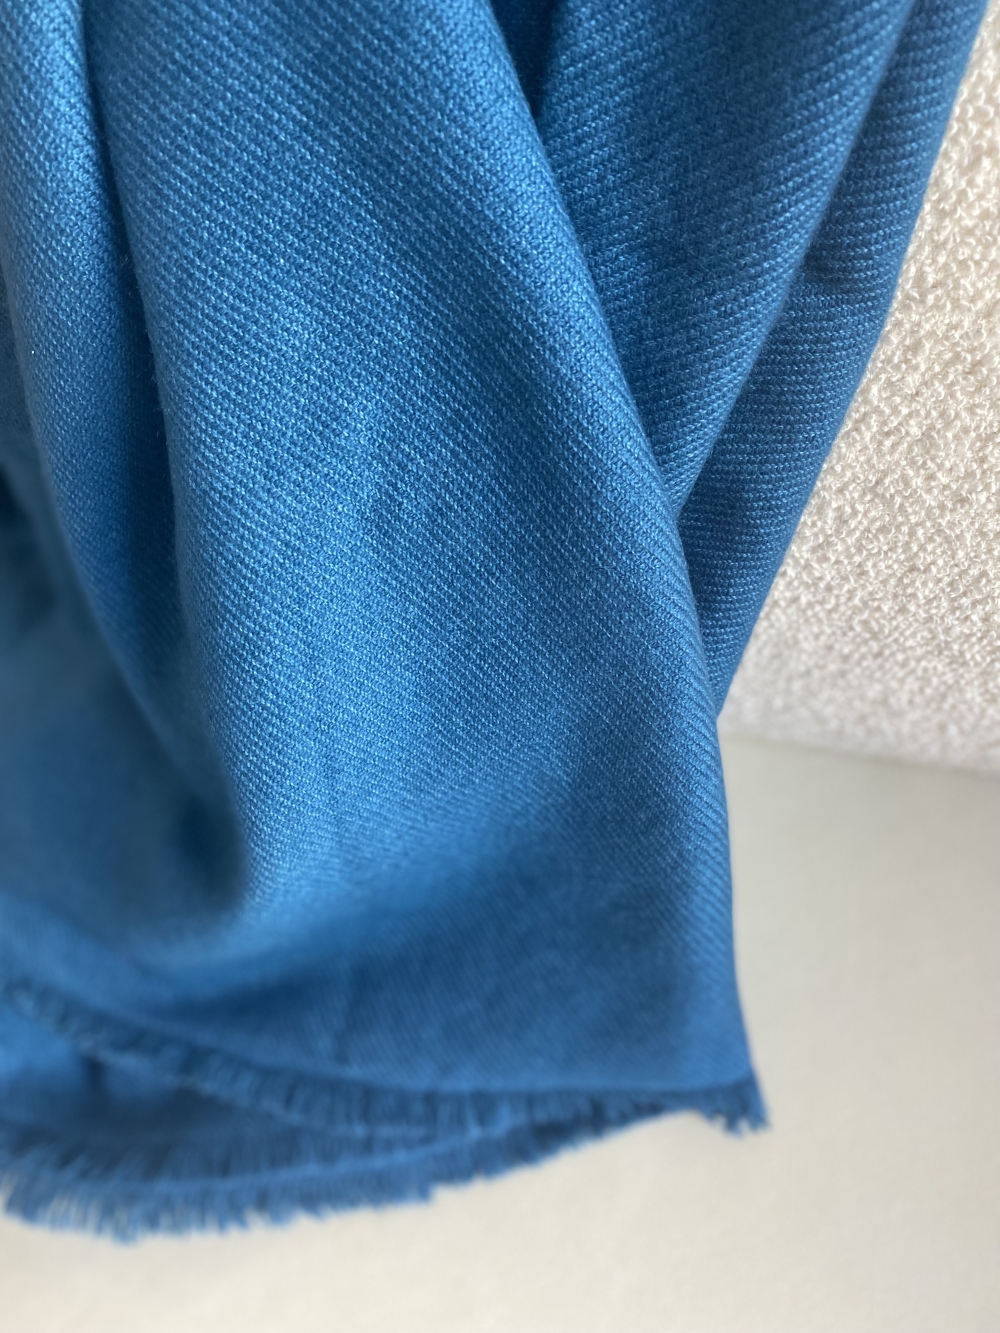 Cachemire accessoires homewear toodoo plain s 140 x 200 bleu canard 140 x 200 cm